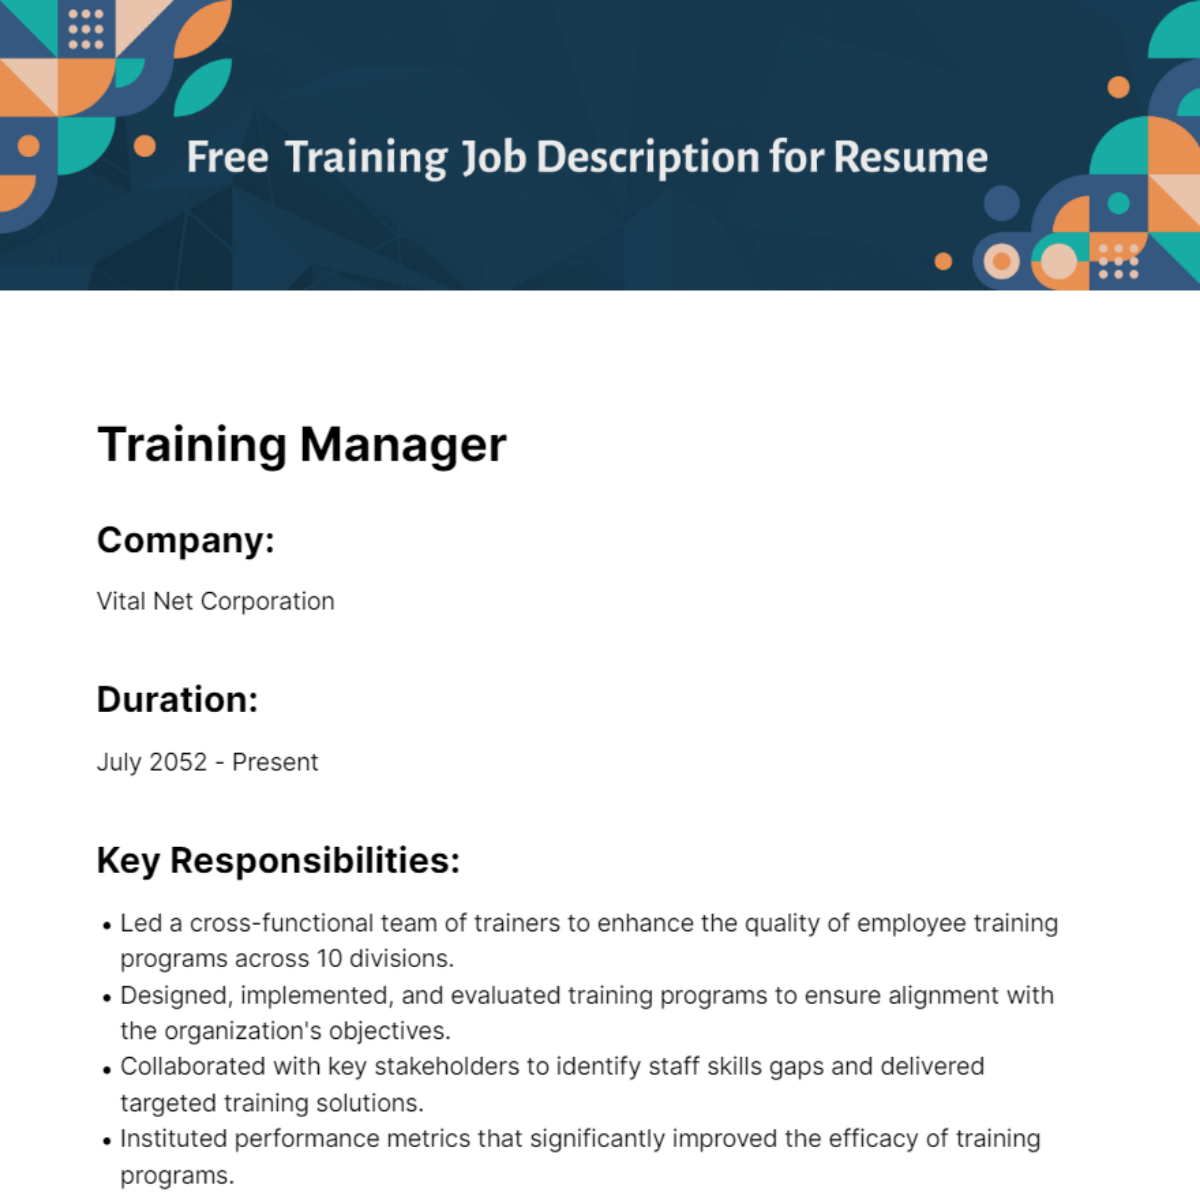 Training Job Description for Resume Template